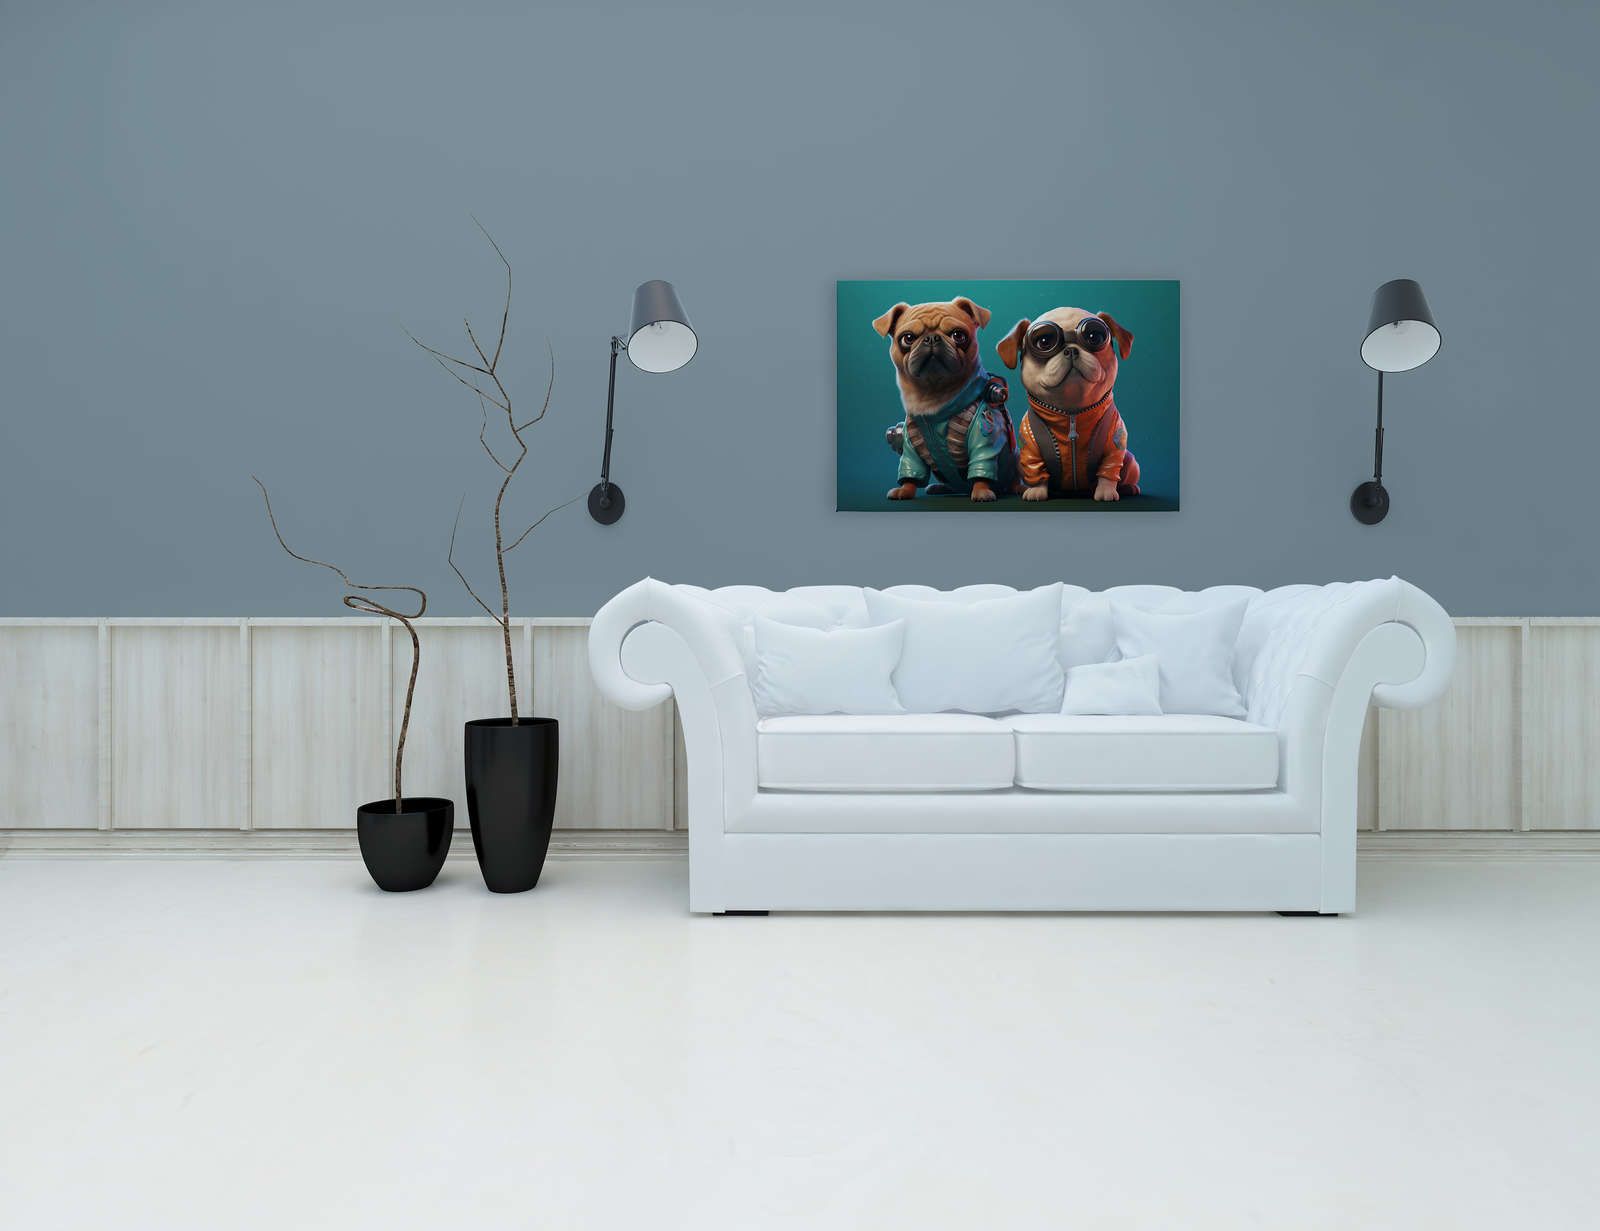             KI Canvas painting »Cute Dogs« - 90 cm x 60 cm
        